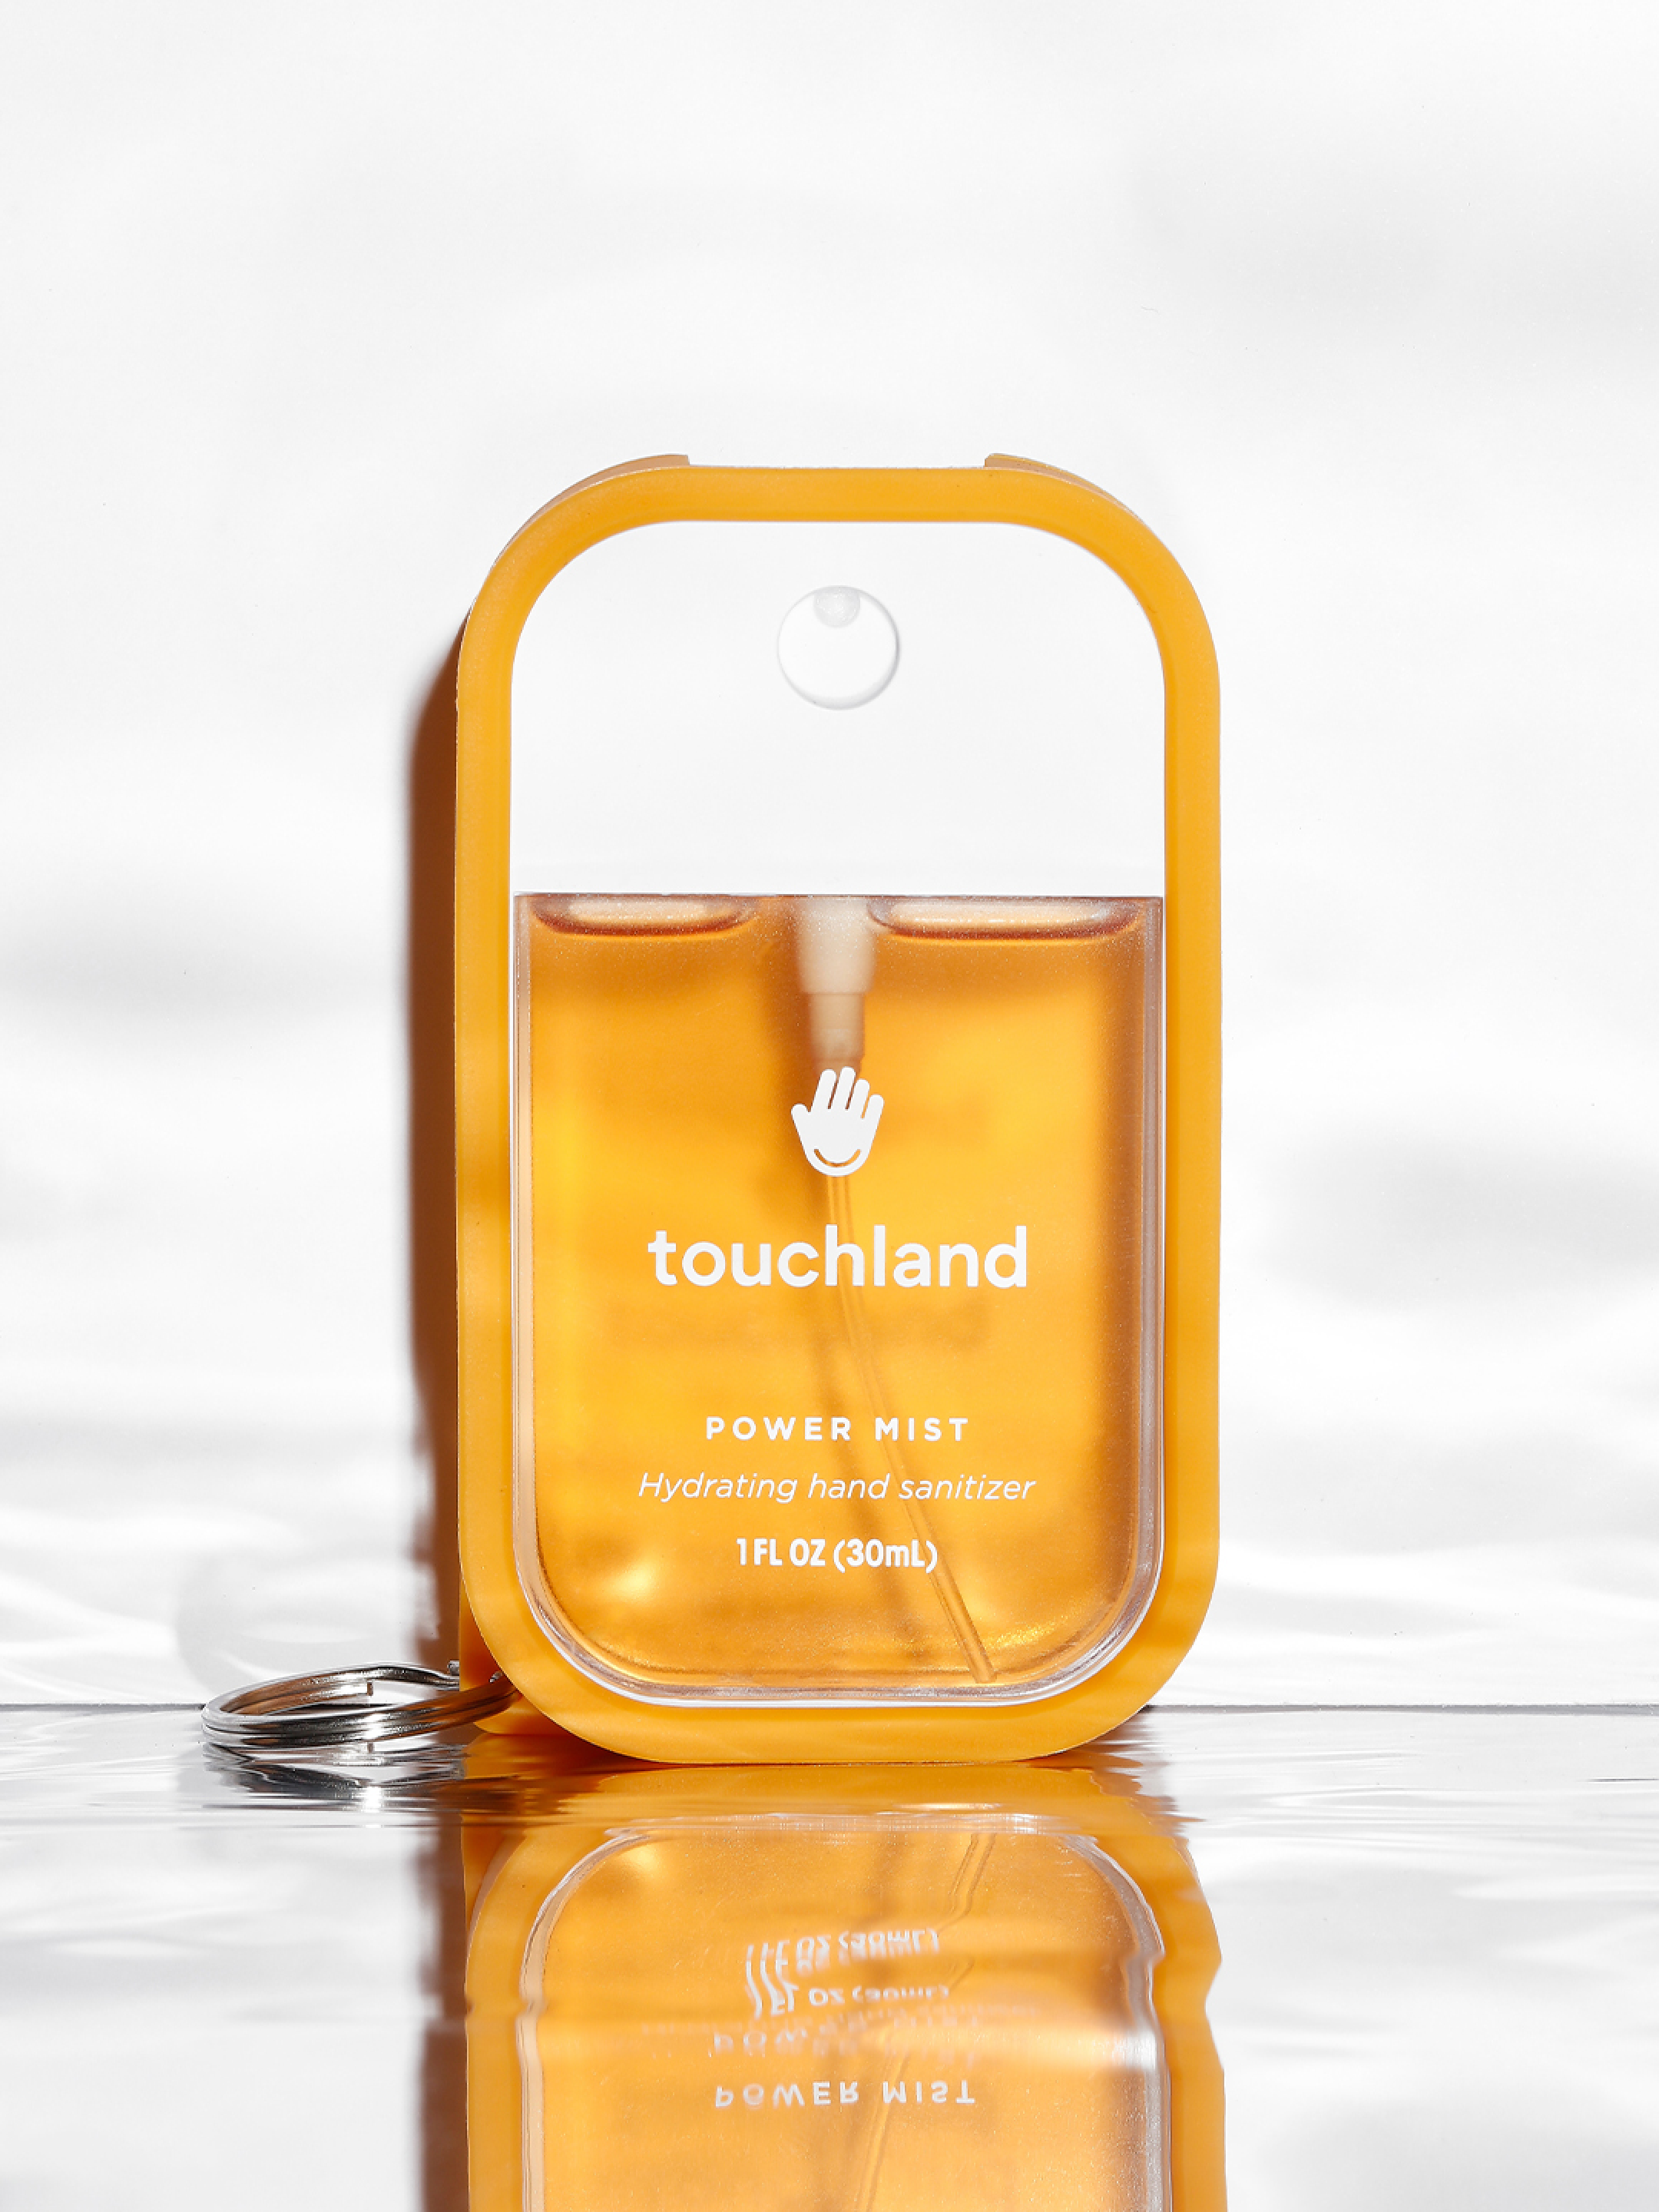 Touchland orange case with orange power mist inside on white background